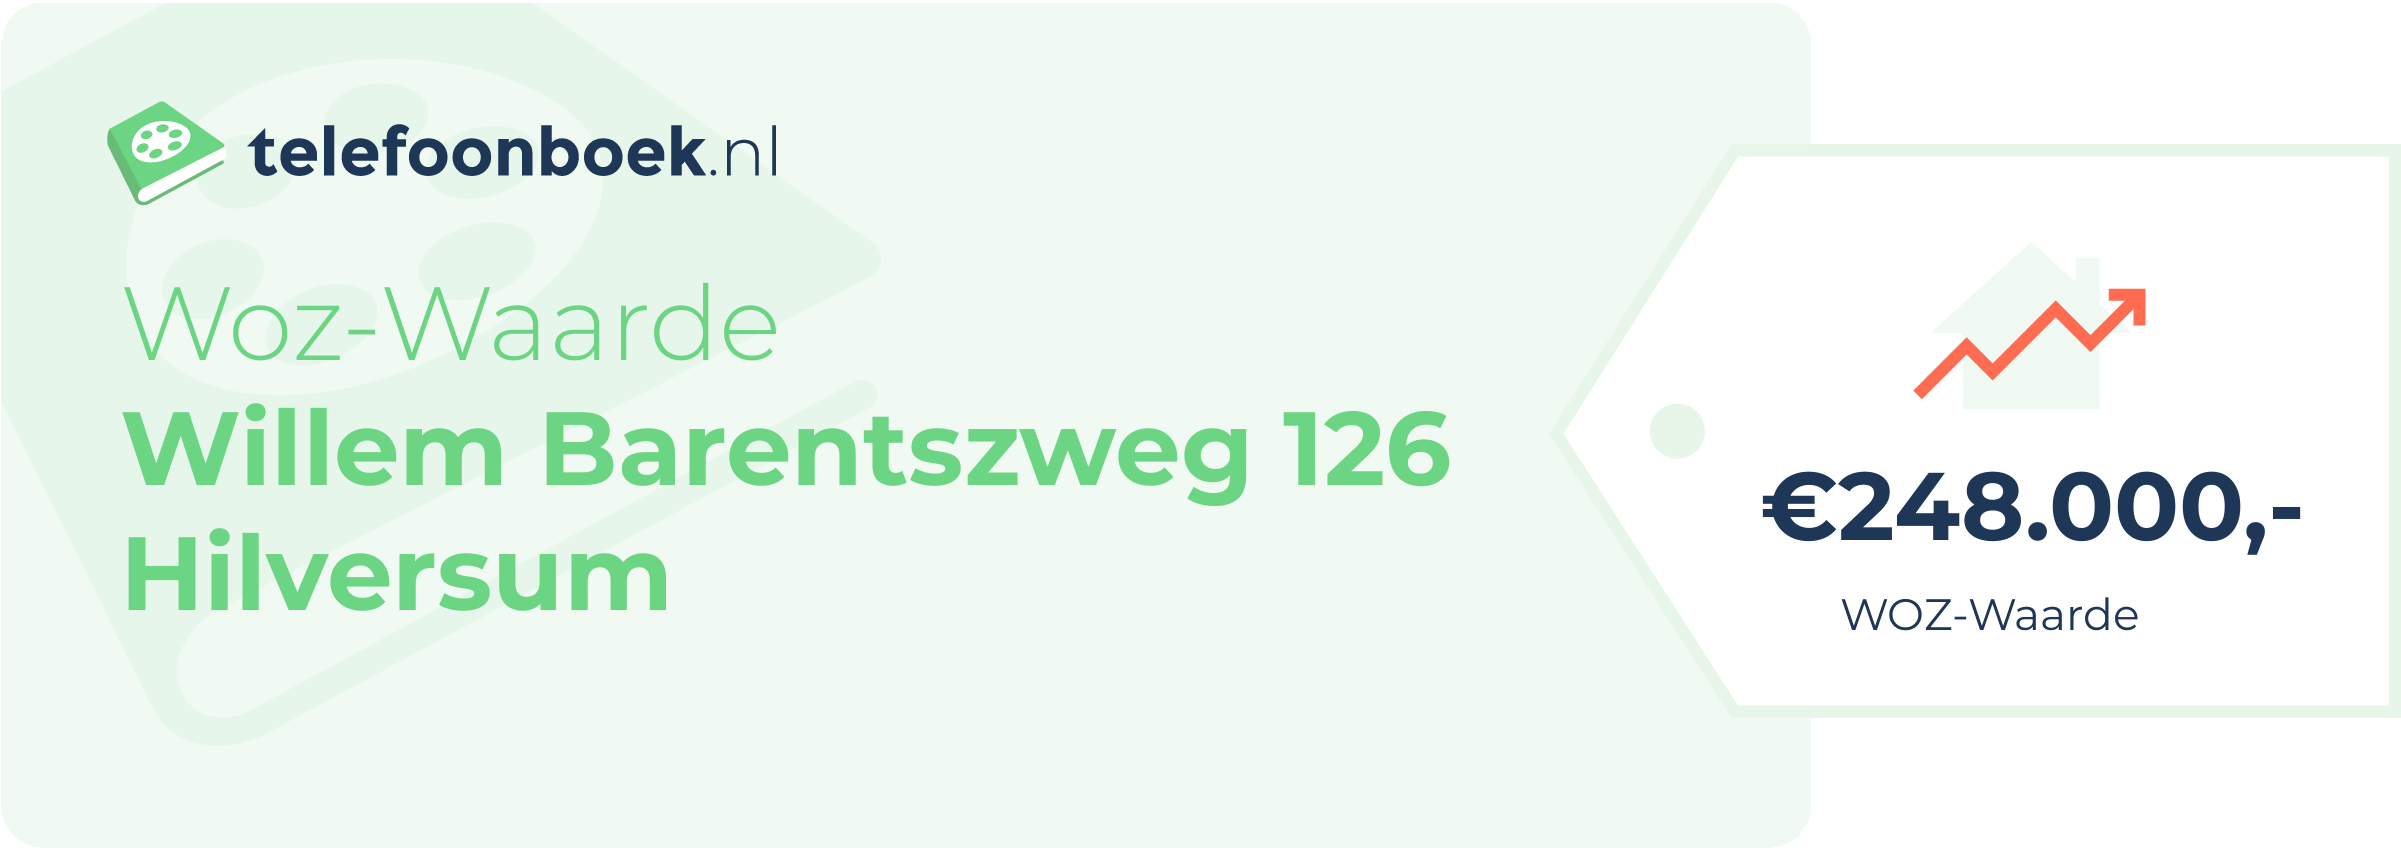 WOZ-waarde Willem Barentszweg 126 Hilversum